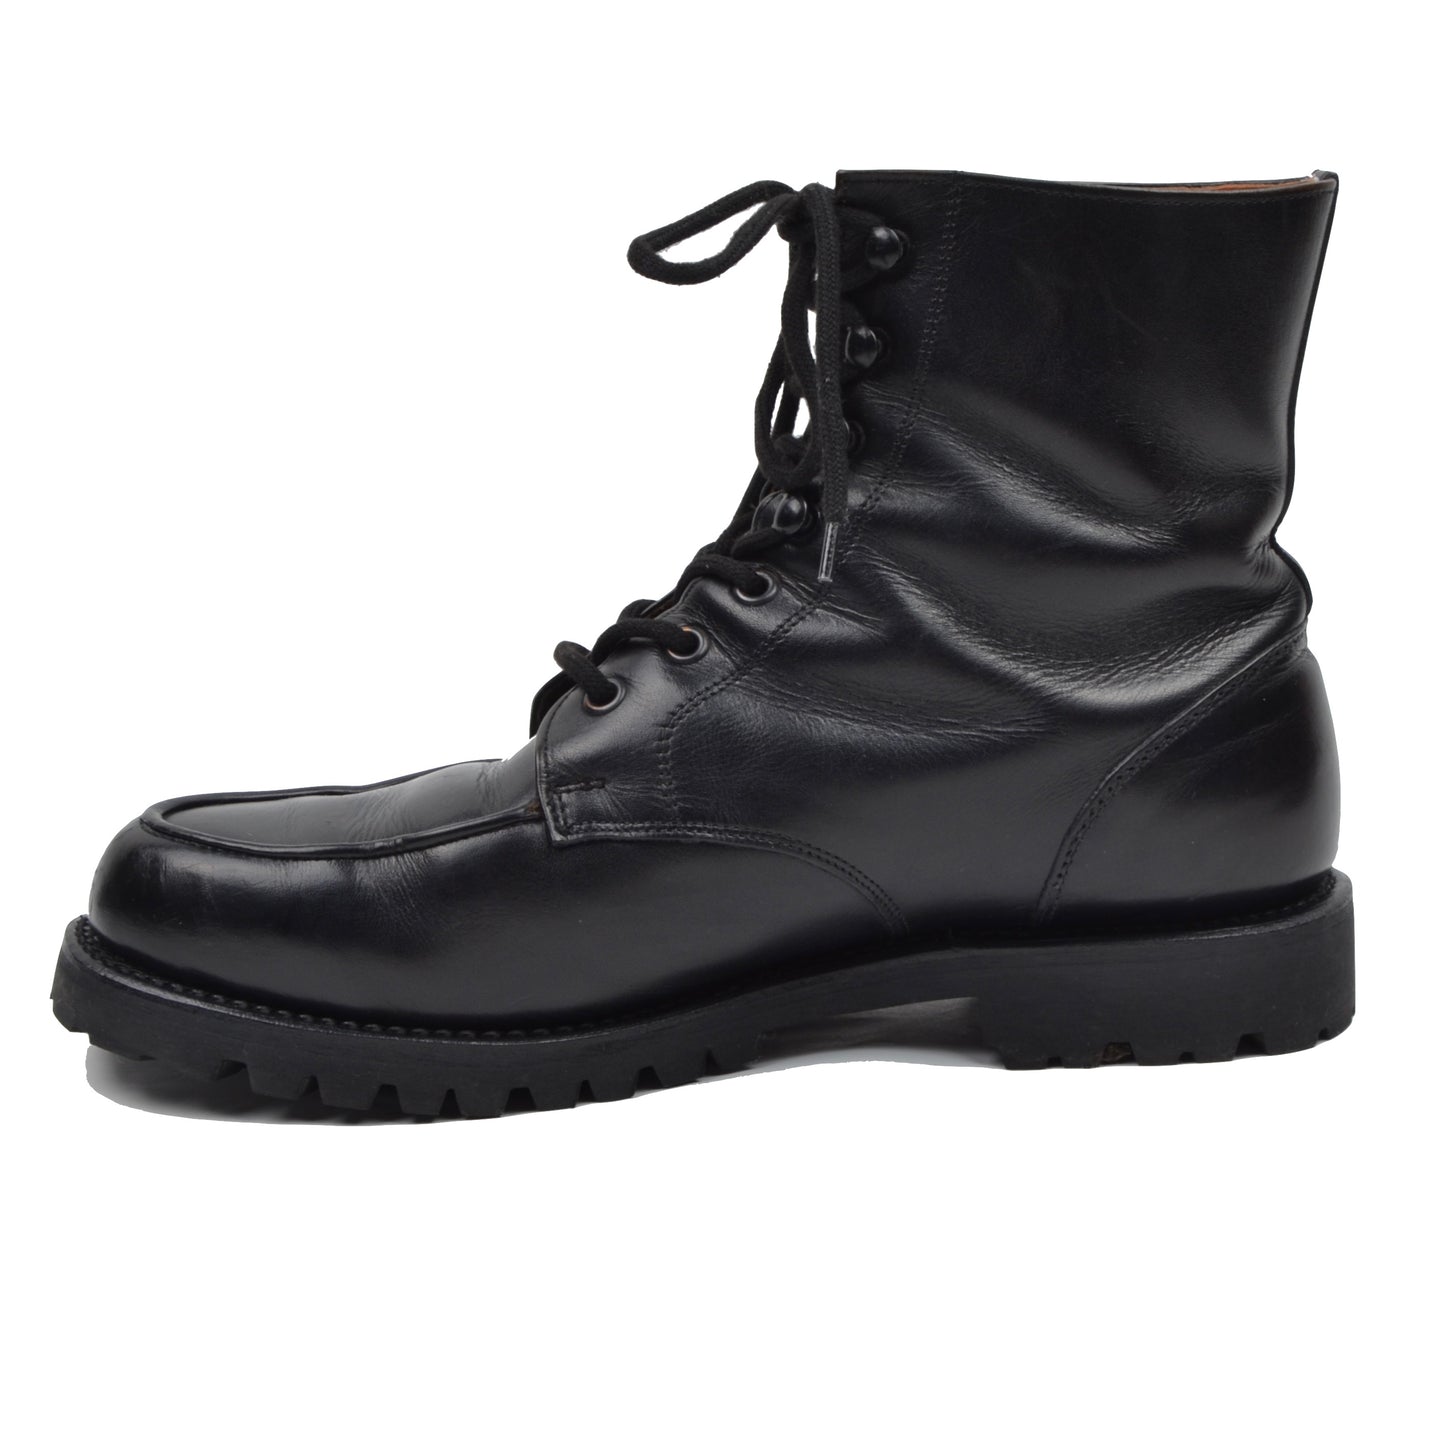 Ludwig Reiter Juchtenleder Jump Boots Size 7 - Black